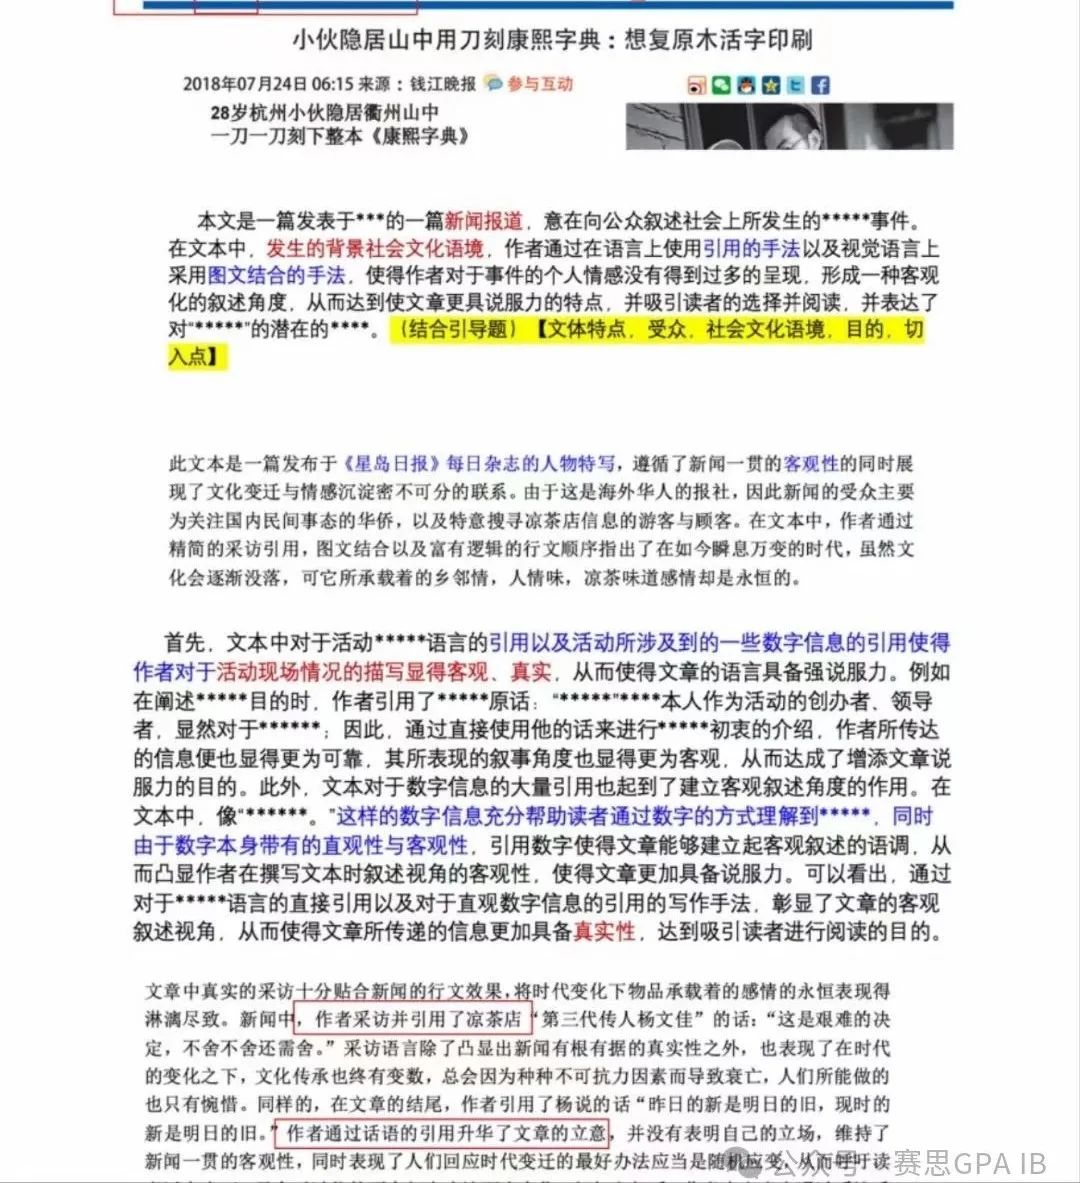 IB中文考核要点与素养积累——以广告文体分析为例！